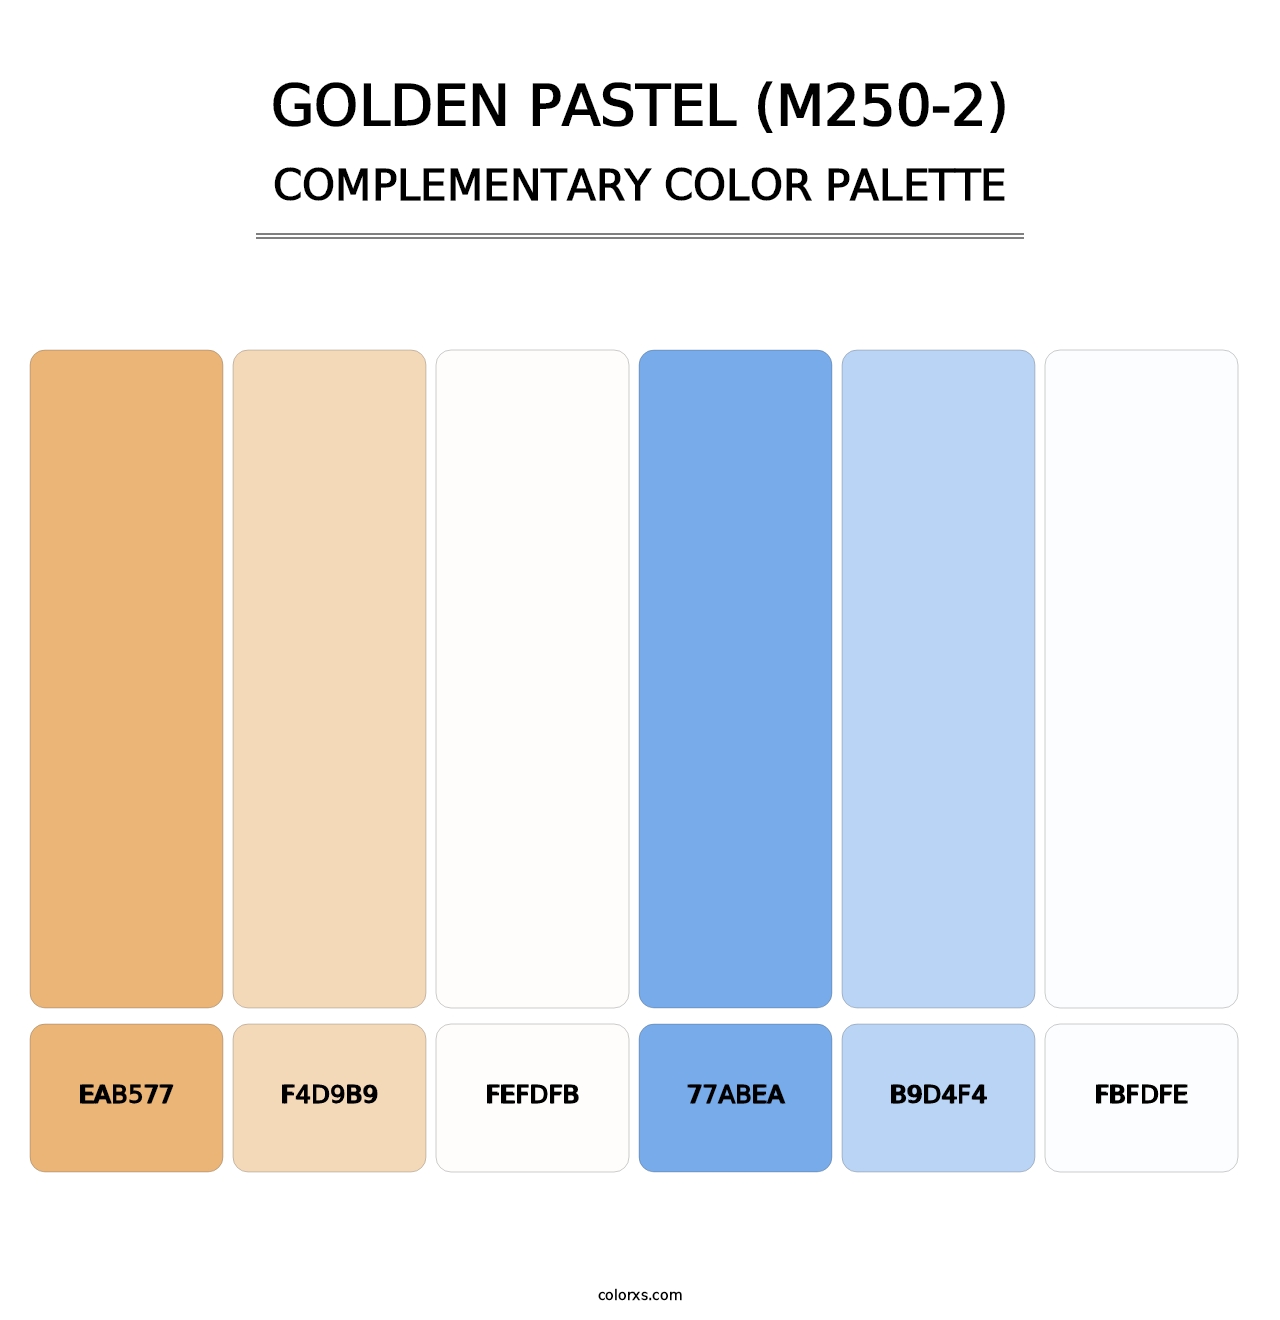 Golden Pastel (M250-2) - Complementary Color Palette